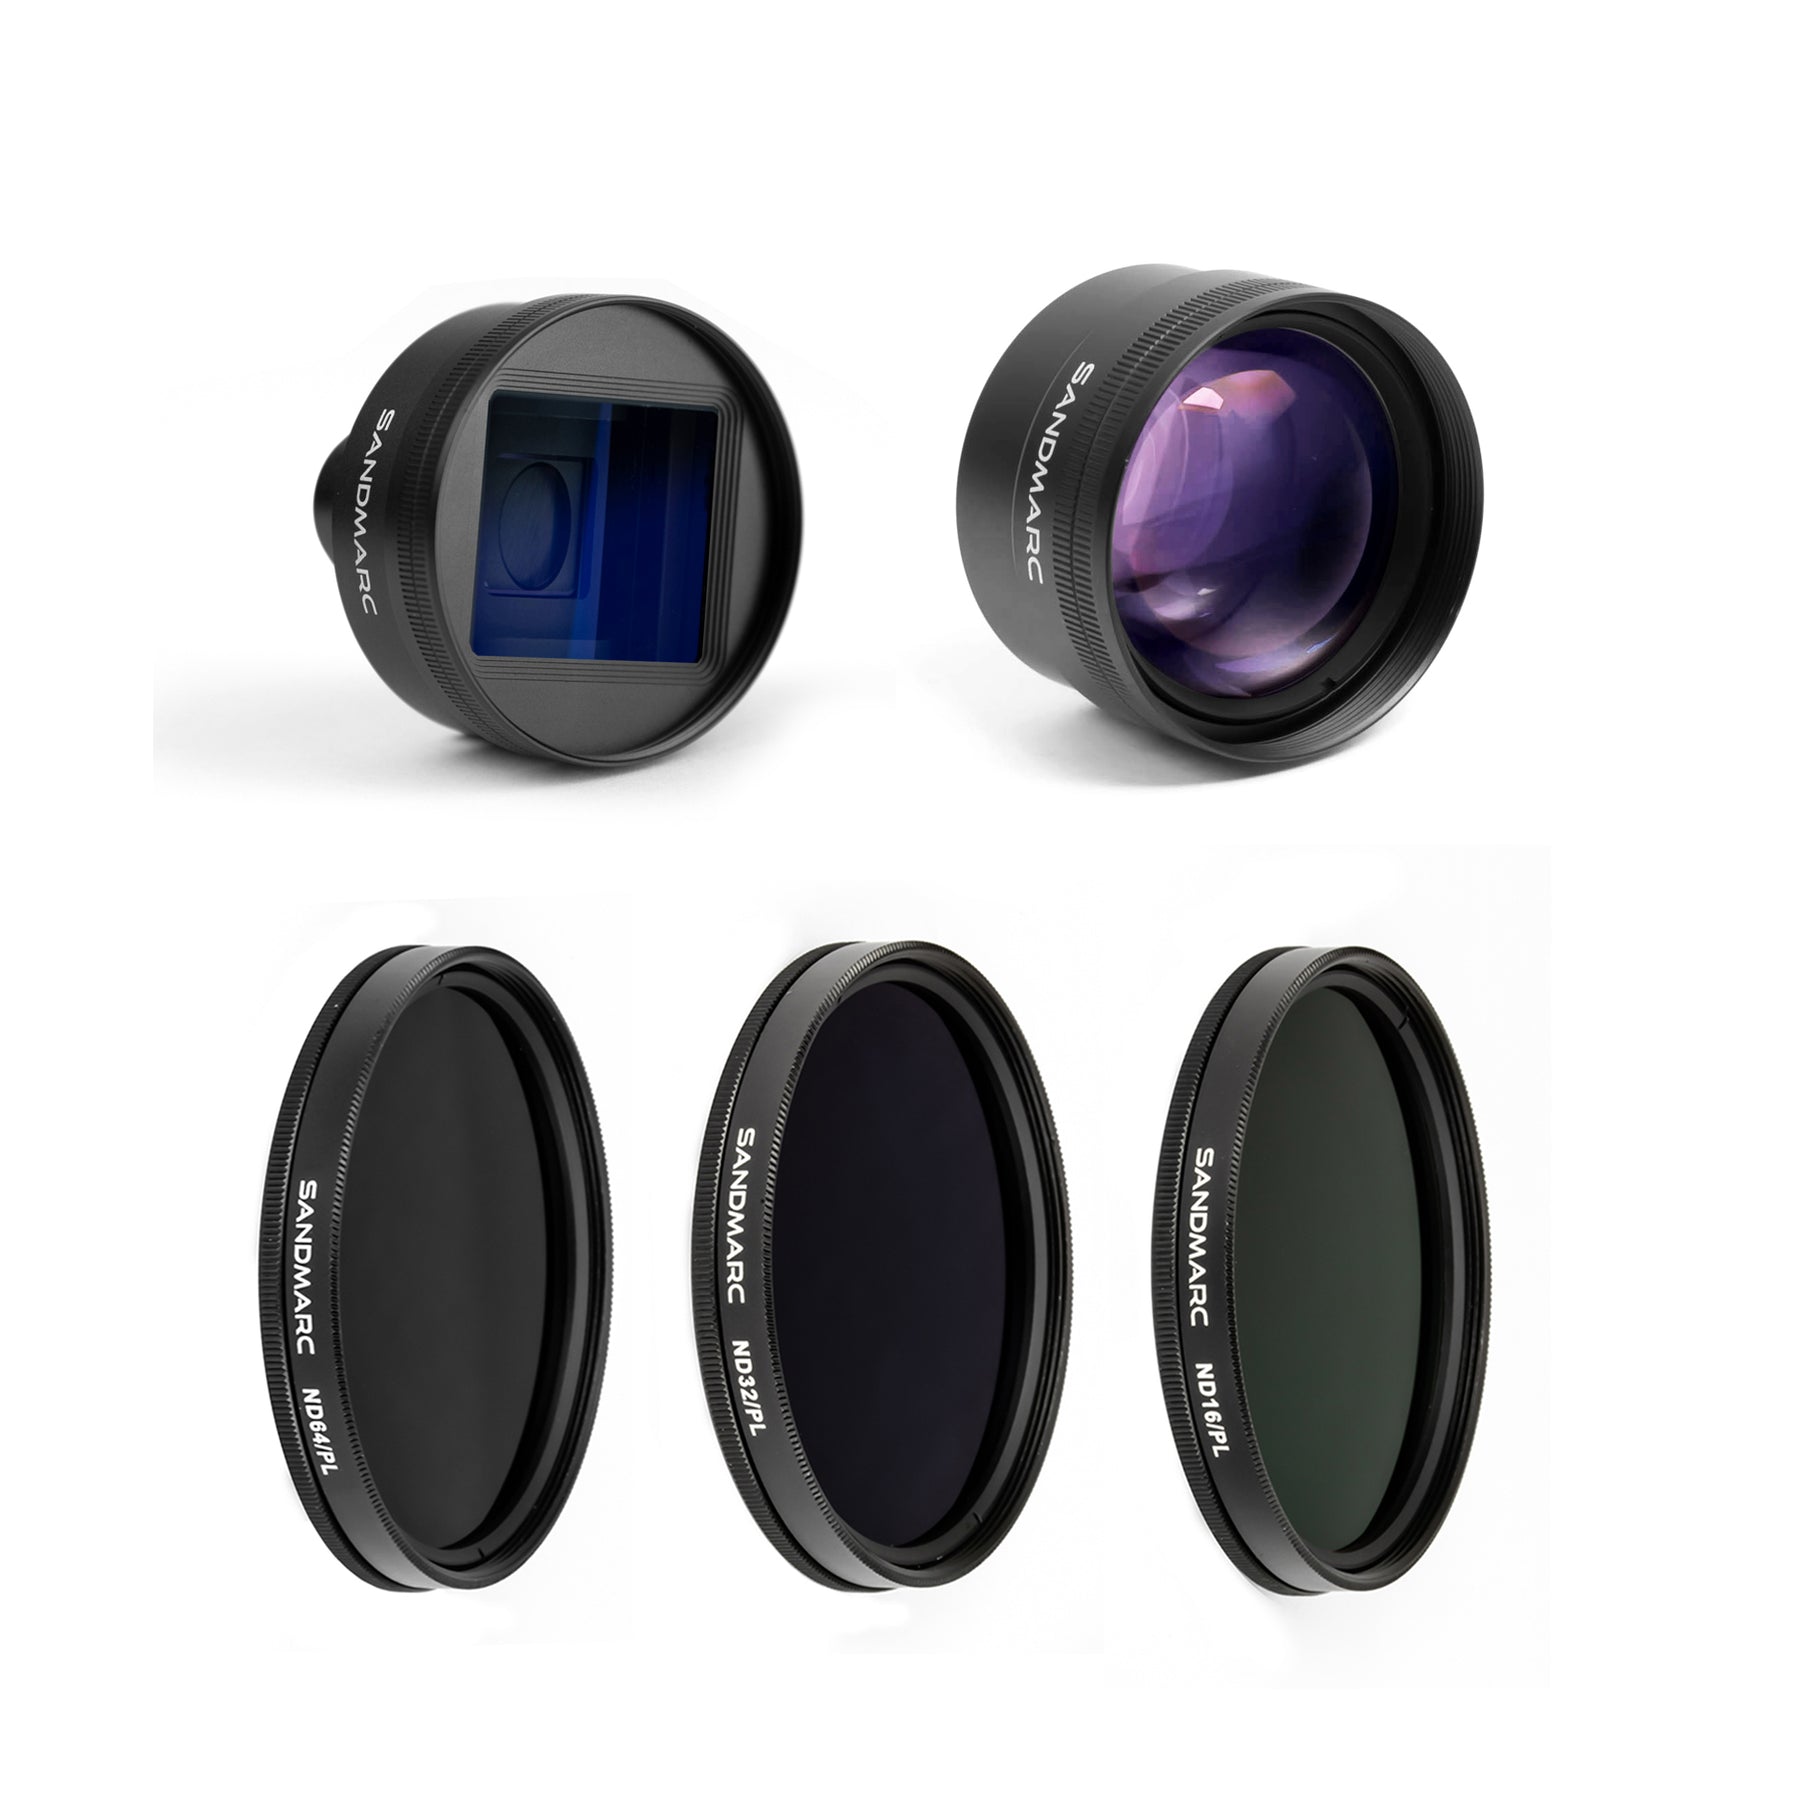 iPhone 12 Pro Max Lens Kit for Video - Film Edition - SANDMARC